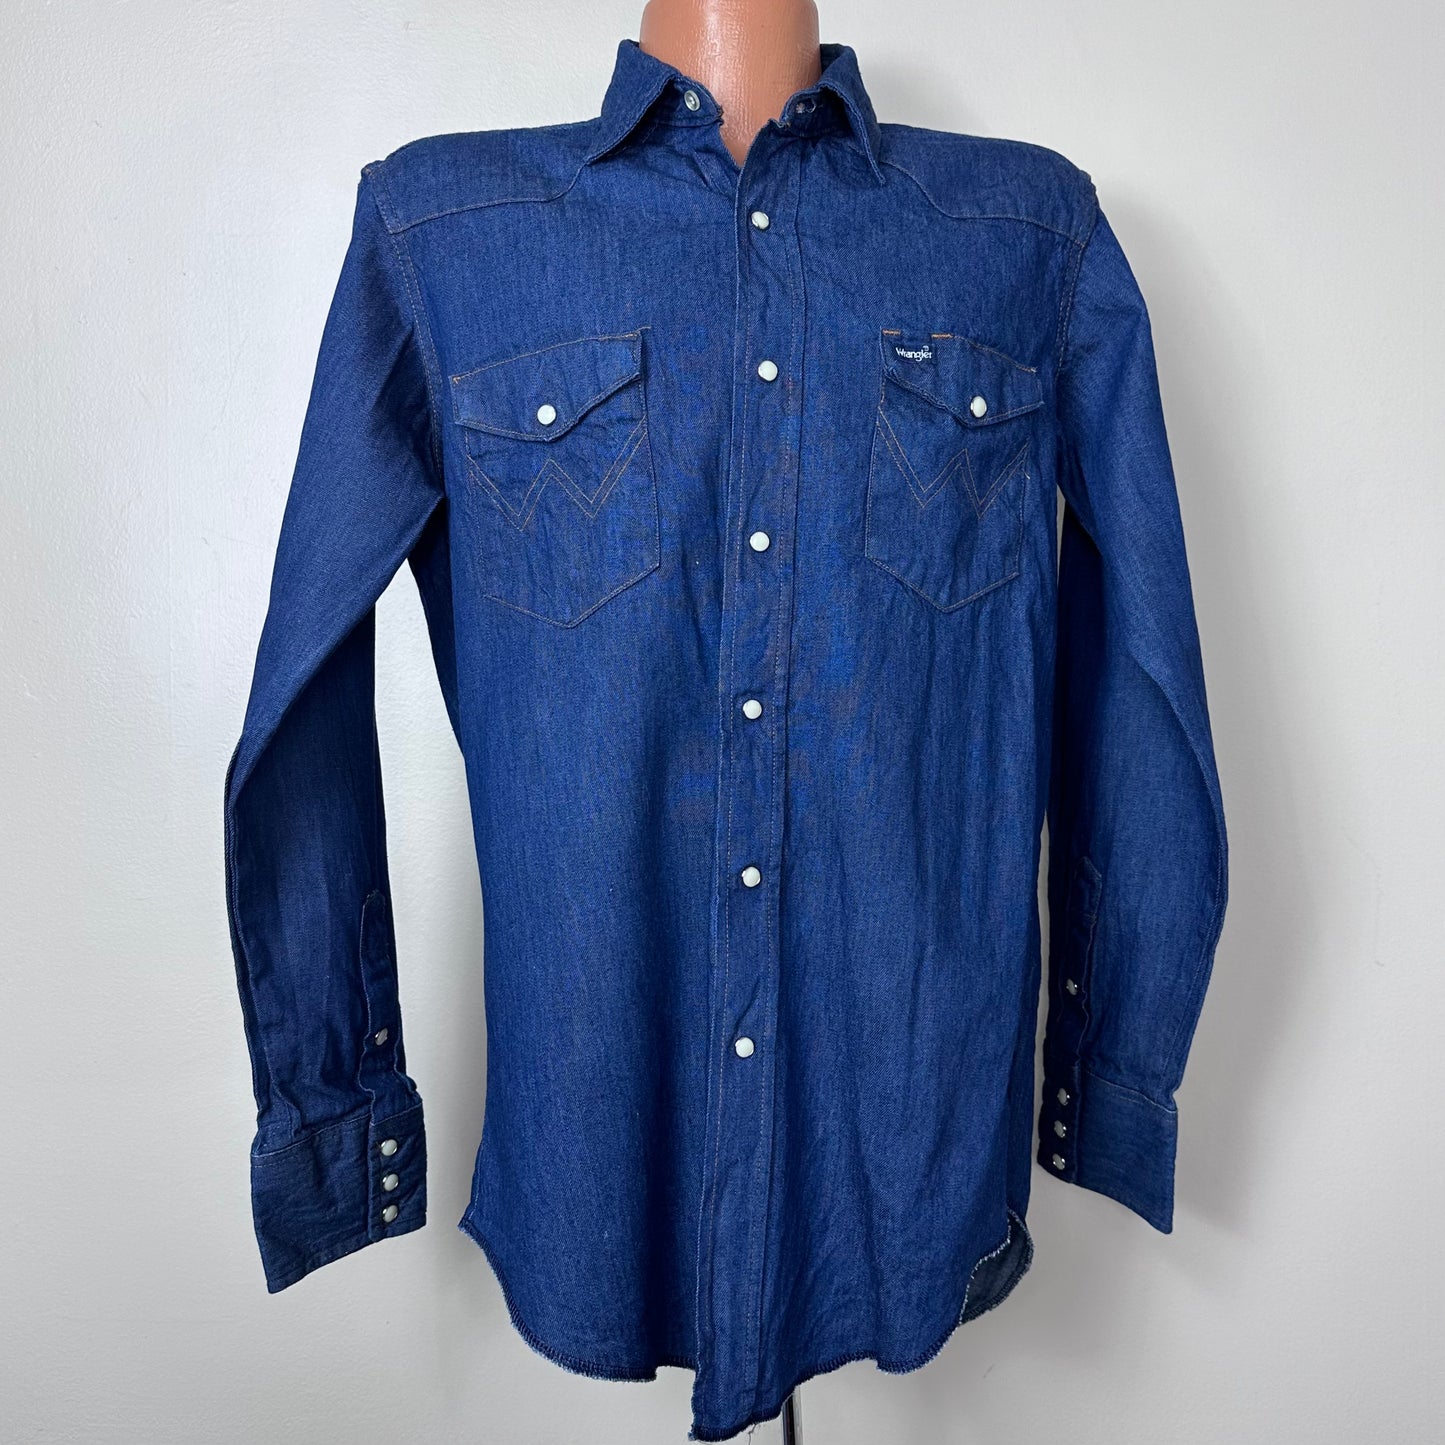 1980s Denim Western Shirt, Wrangler Size Large